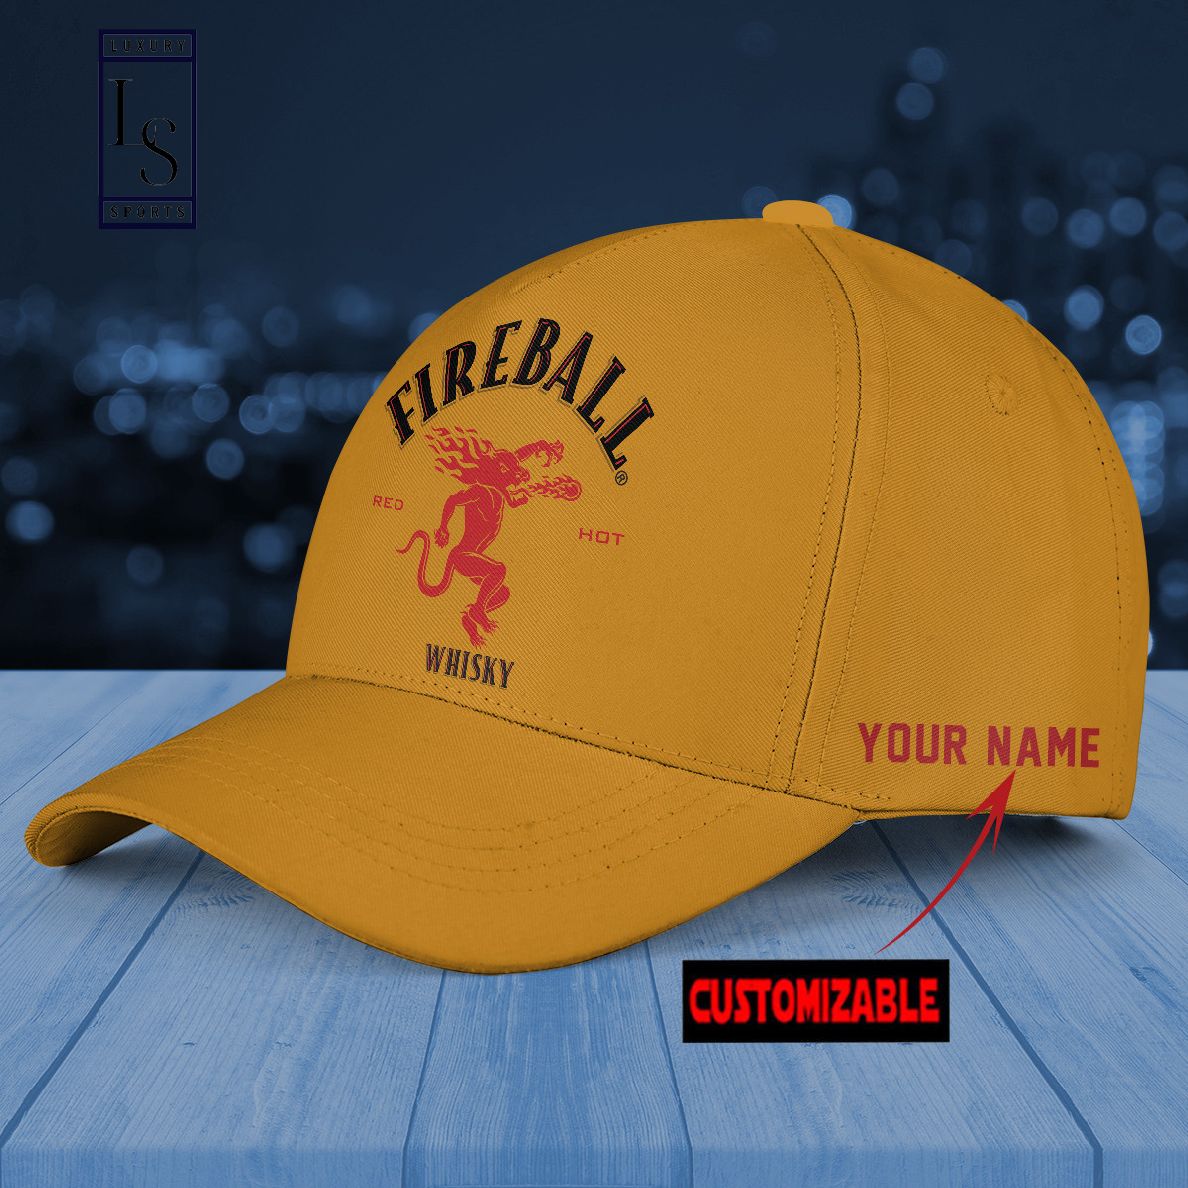 Fireball Customized Baseball Cap